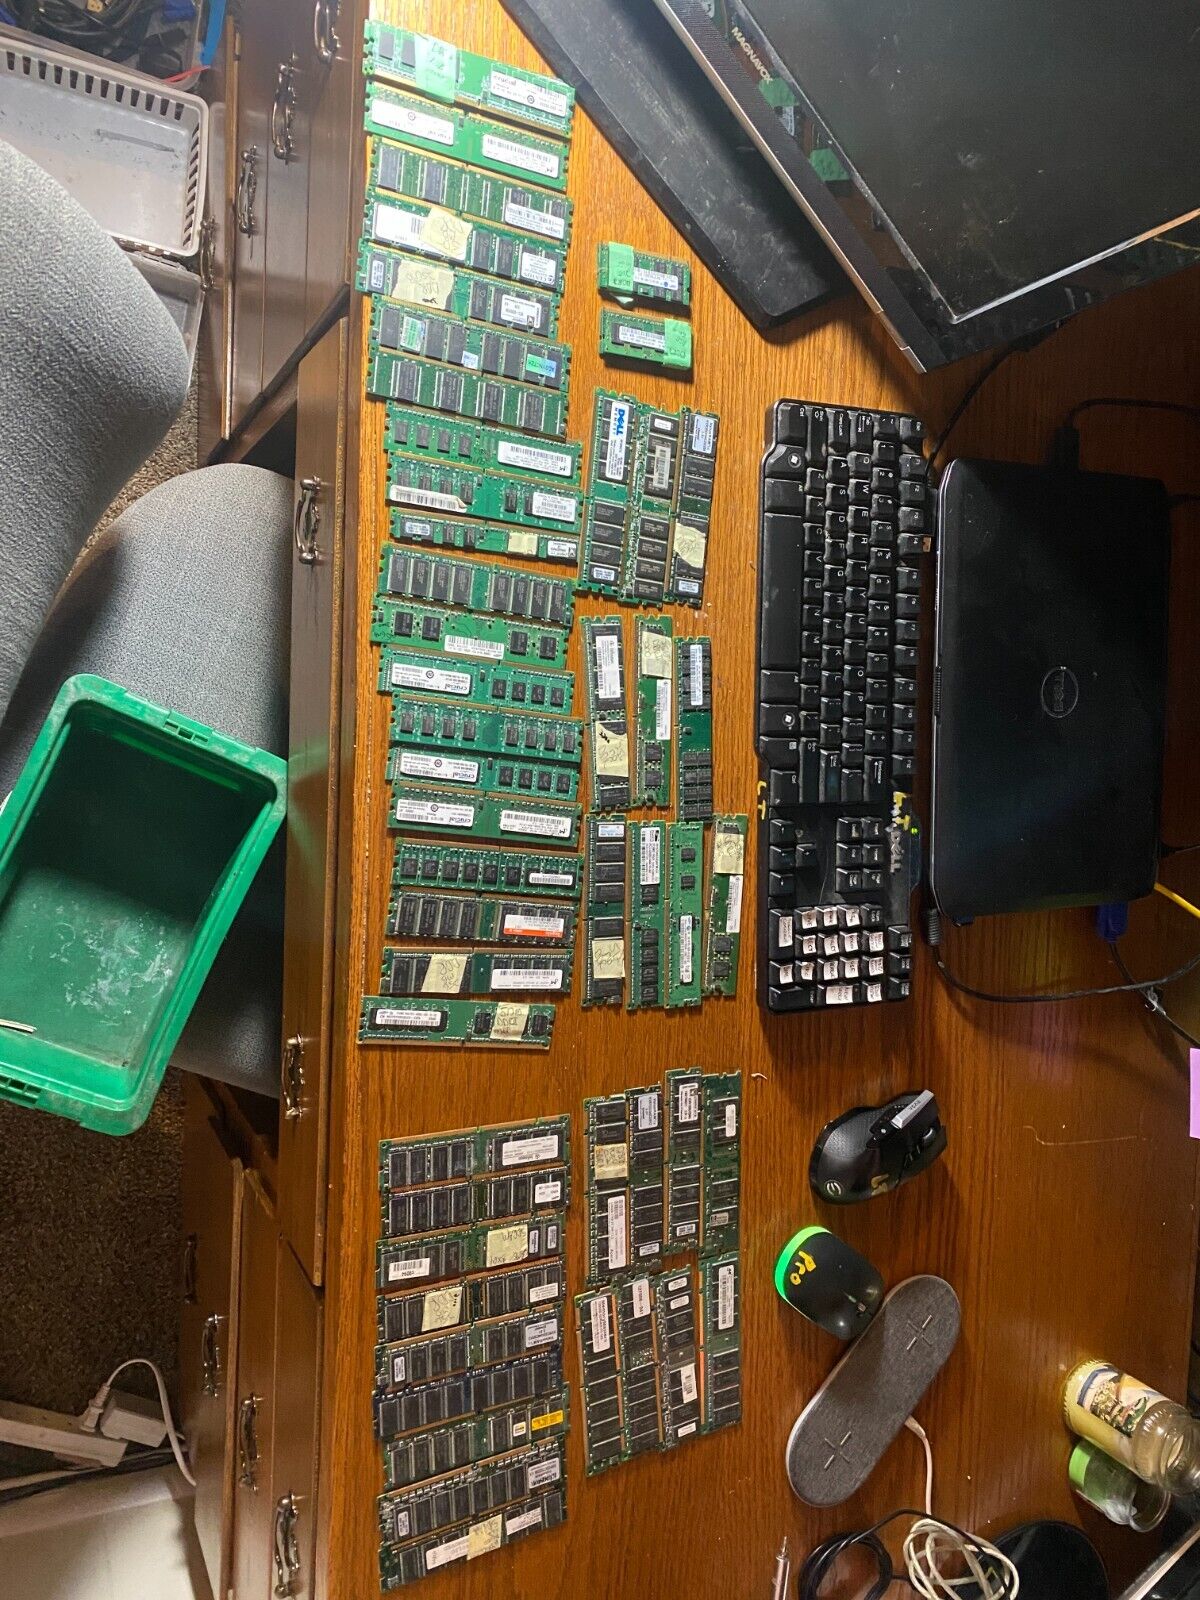 Lot of 50 Assorted RAM Memory Sticks - SDRAM, DDR, DDR2, DDR3, and DDR4